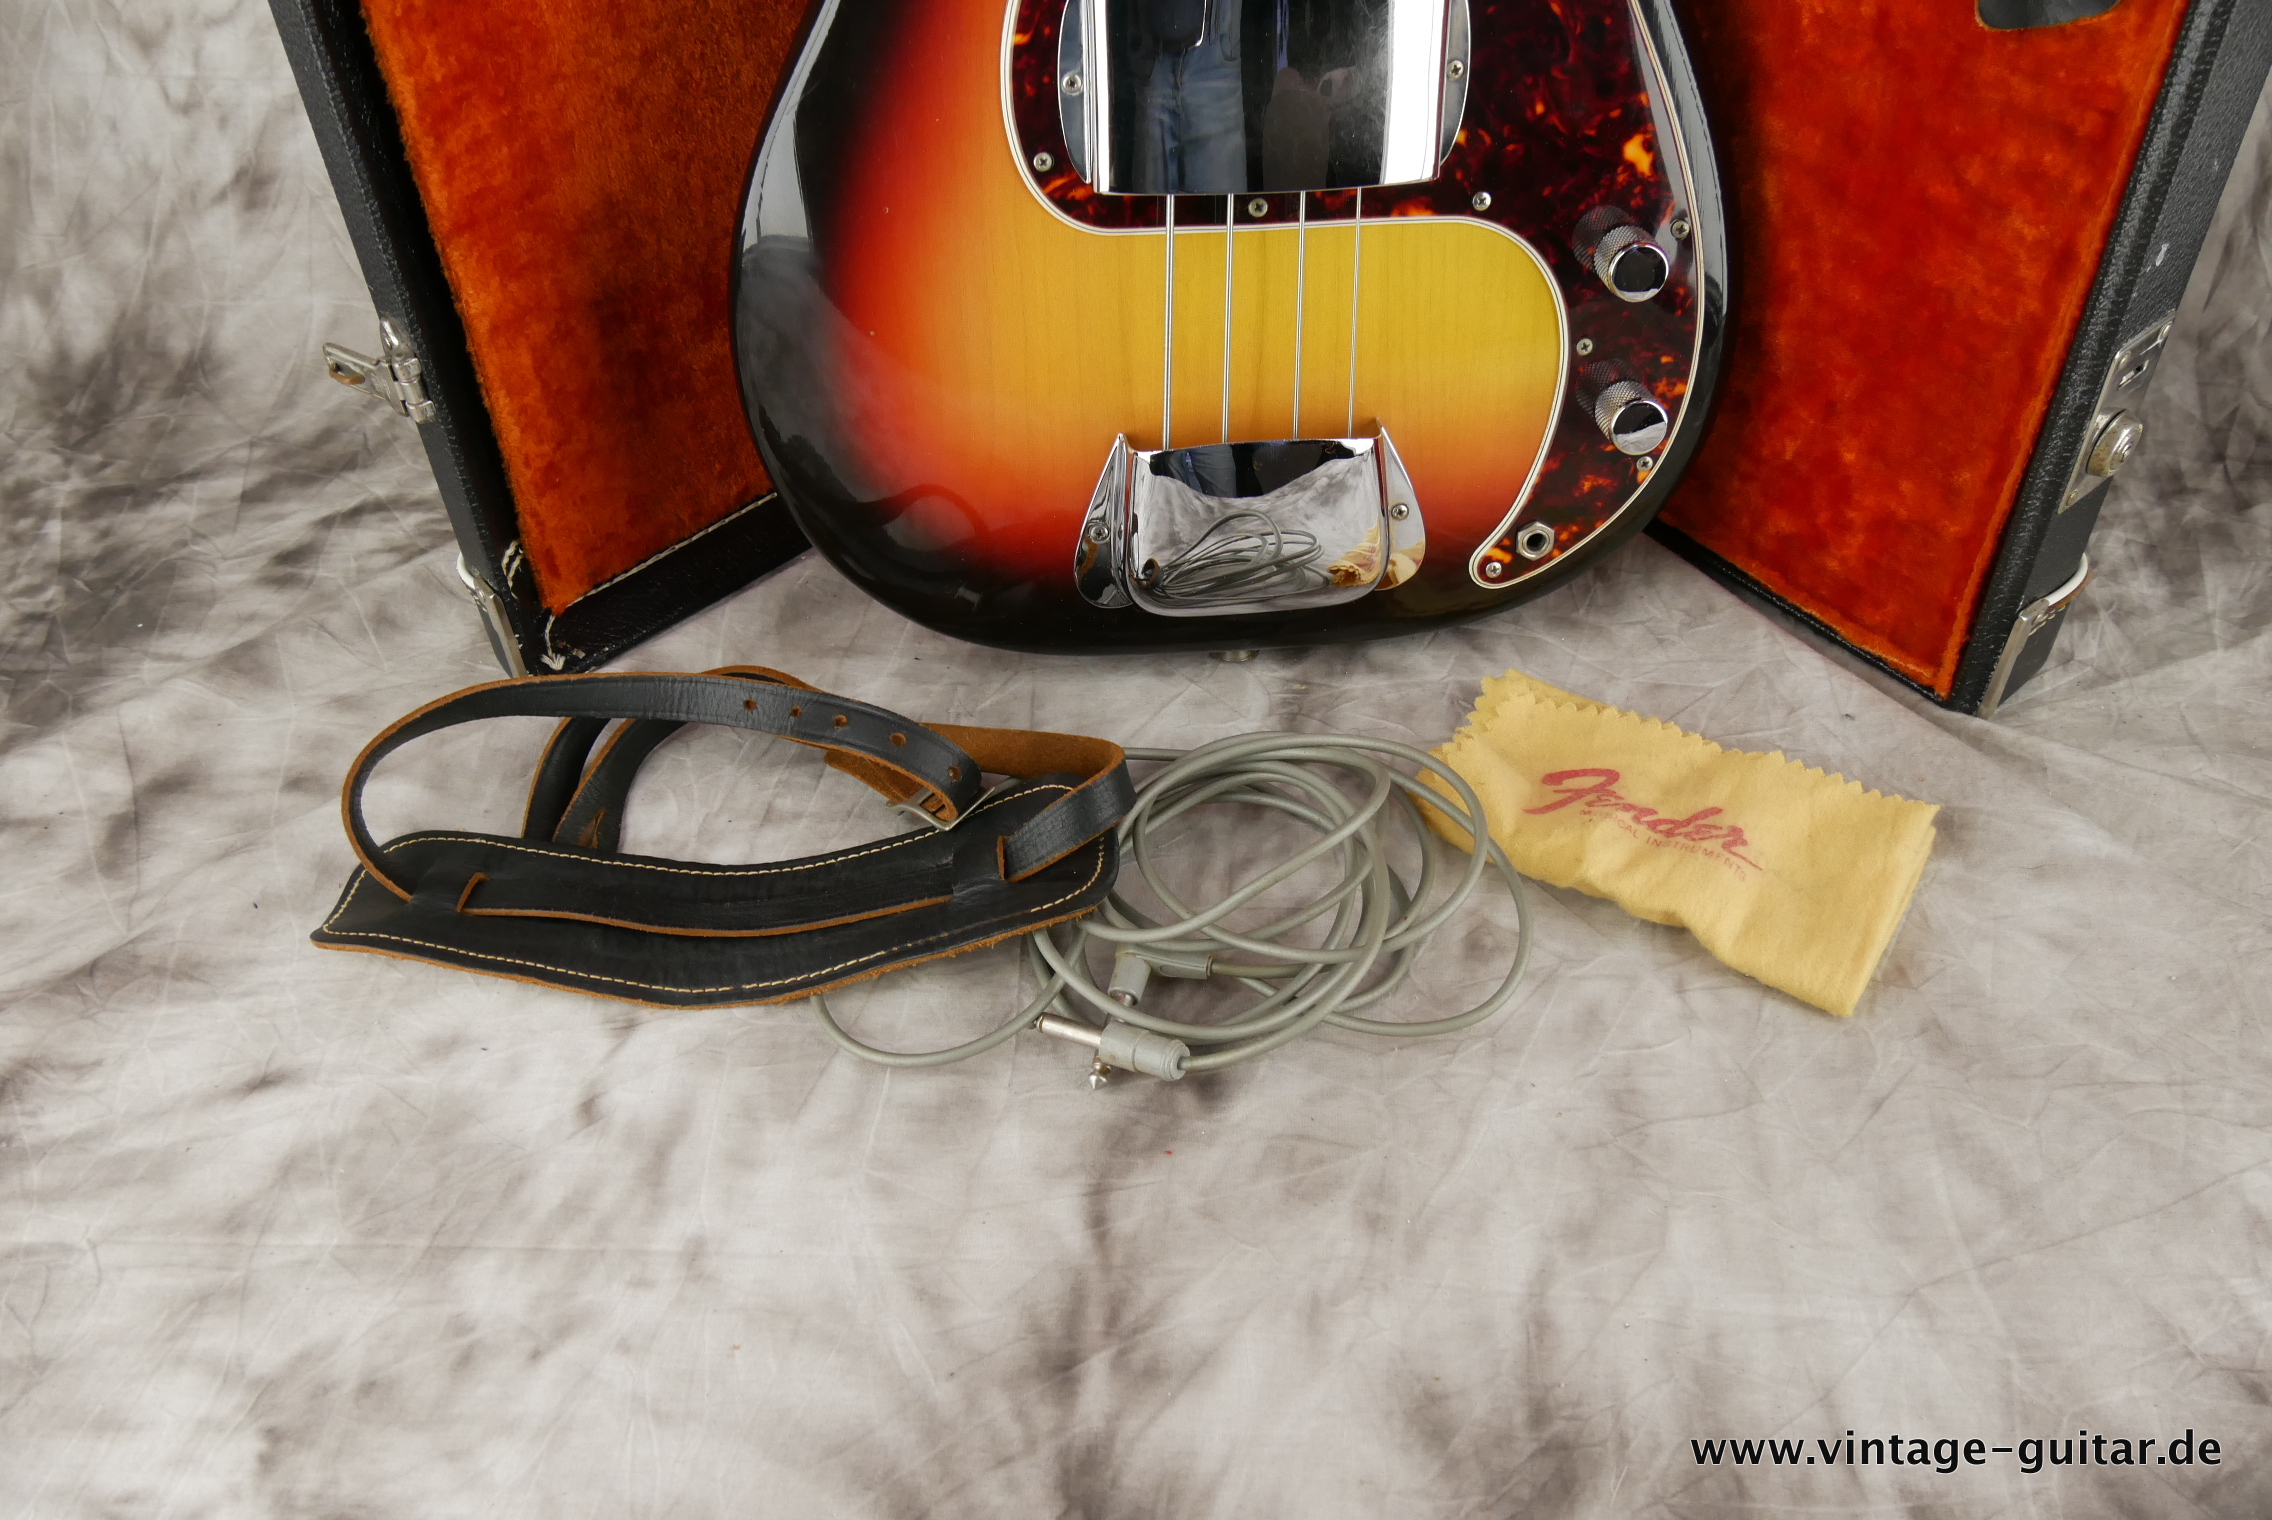 Fender-Precision-Bass-1965-sunburst-mint-condition-016.JPG